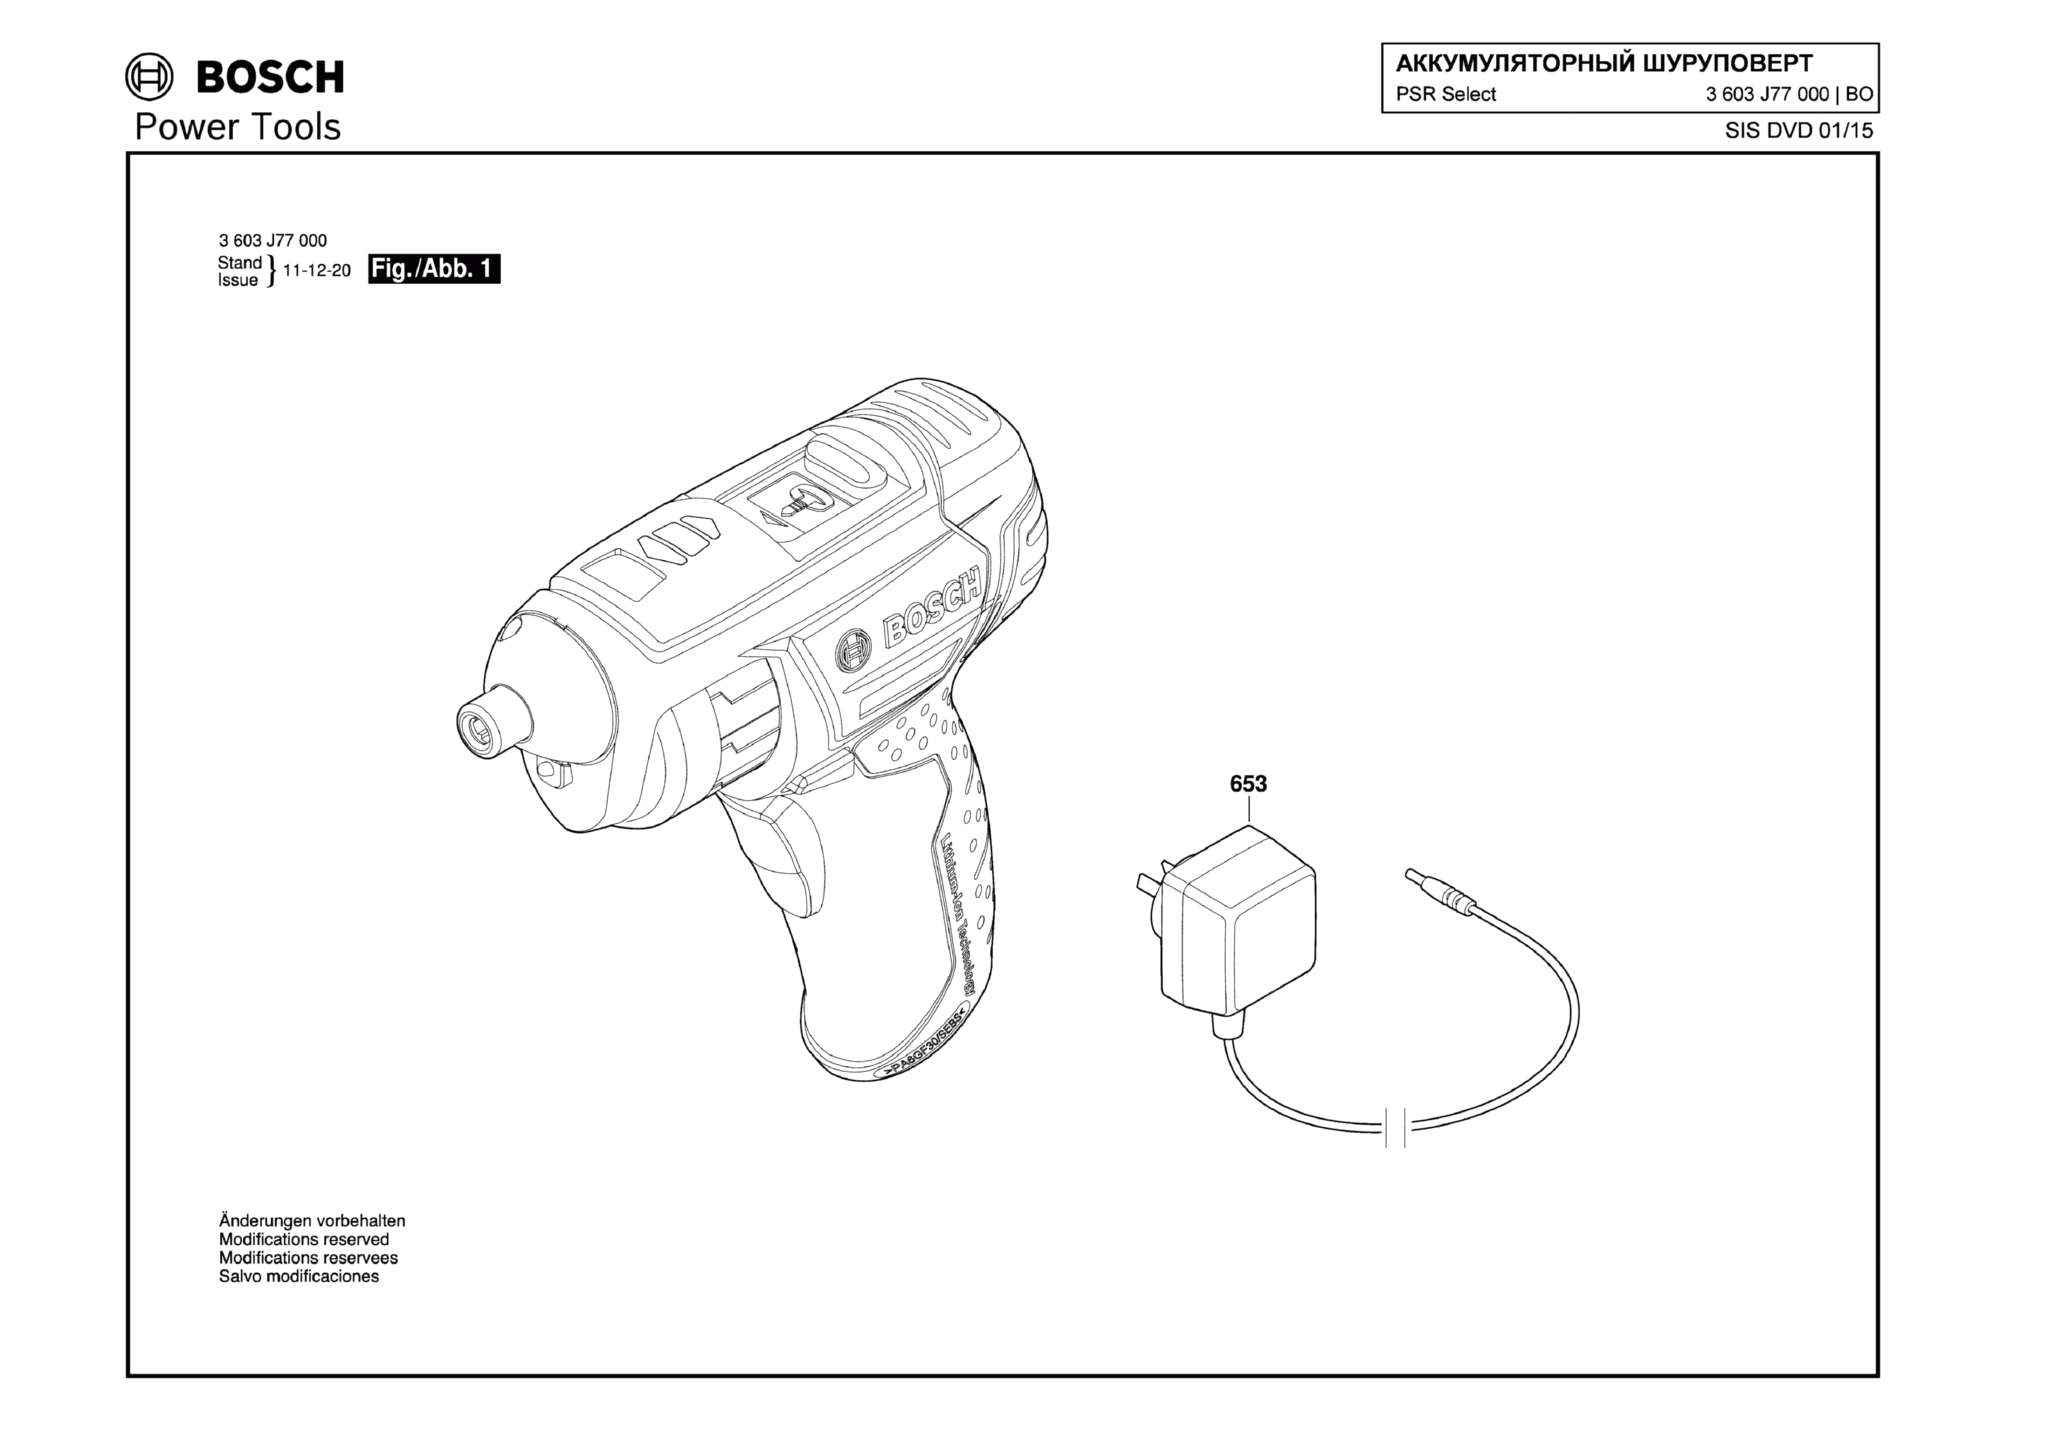 Запчасти, схема и деталировка Bosch PSR Select (ТИП 3603J77000)